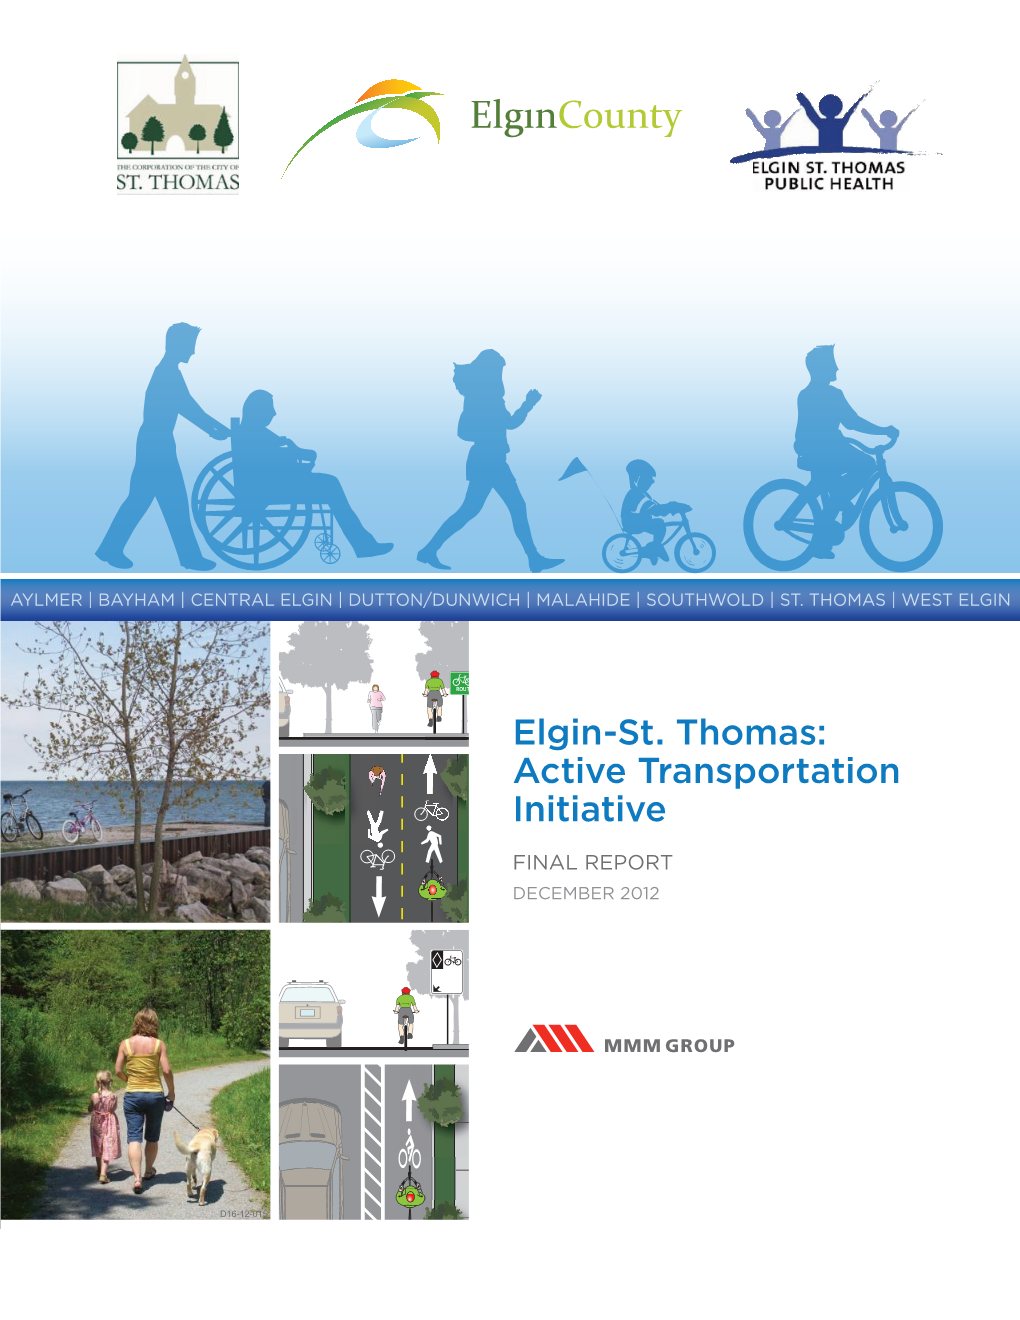 Elgin-St. Thomas: Active Transportation Initiative